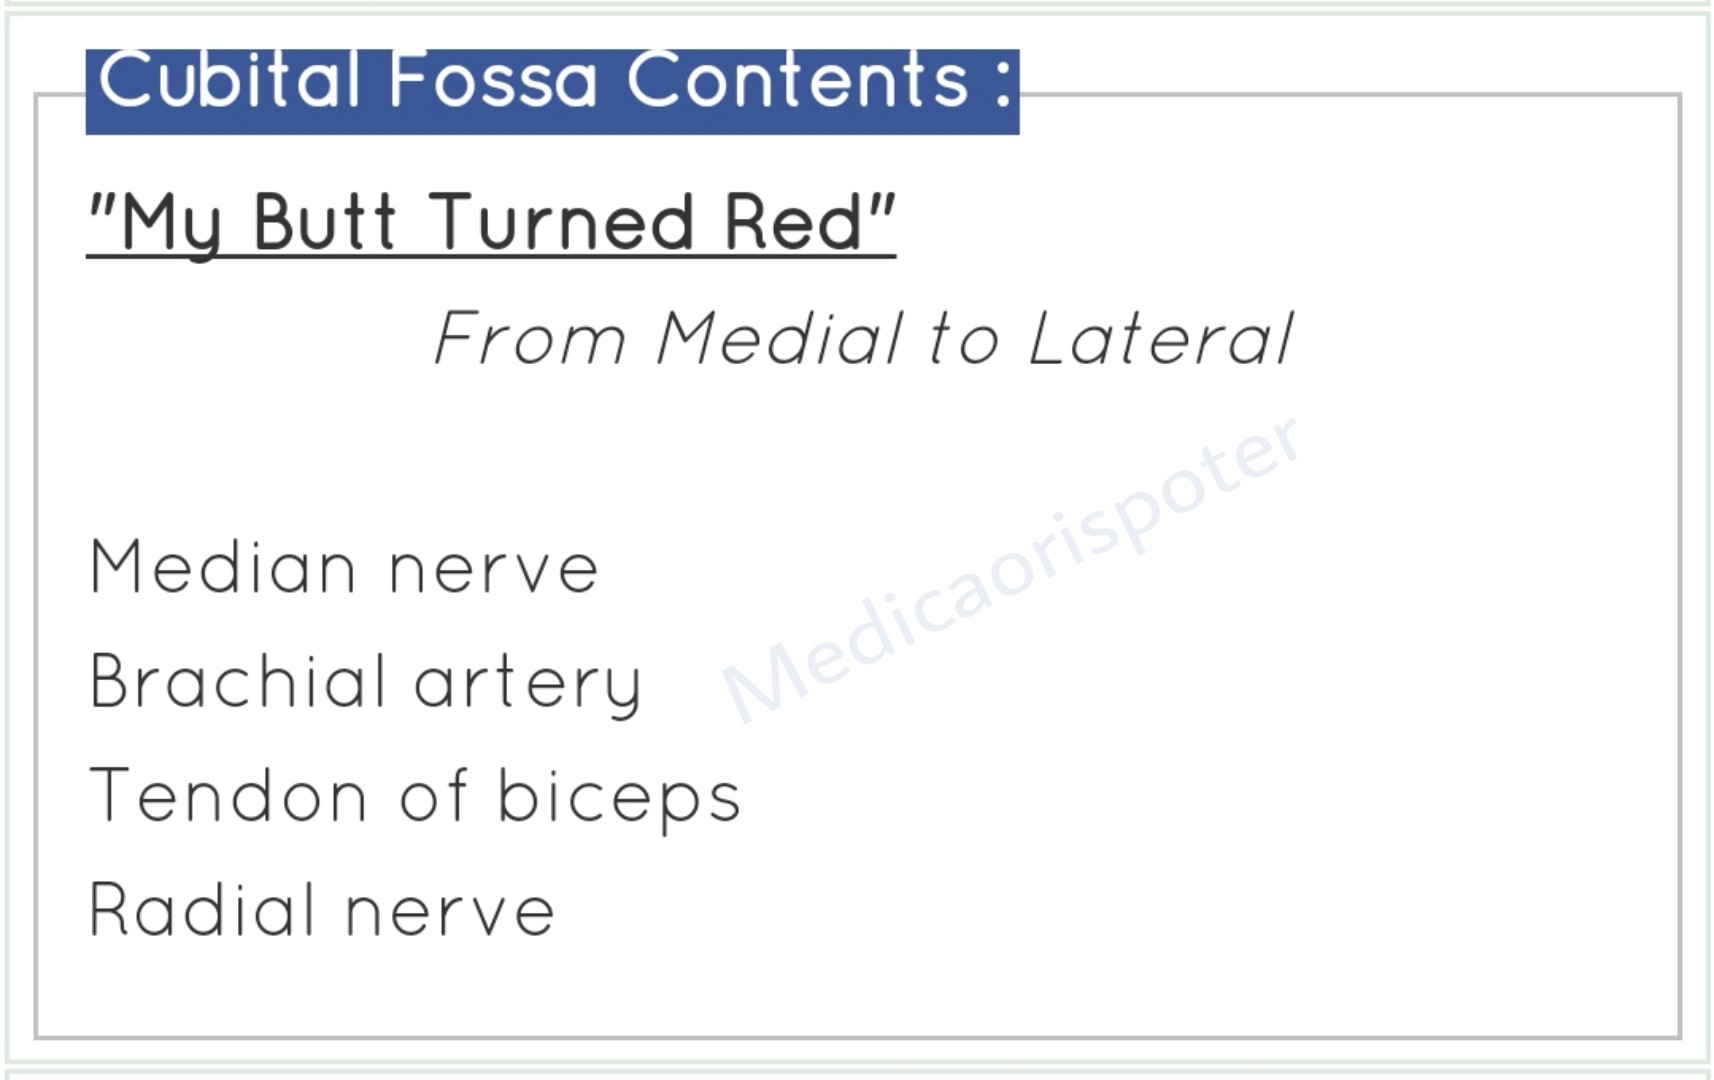 Contents of Cubital Fossa